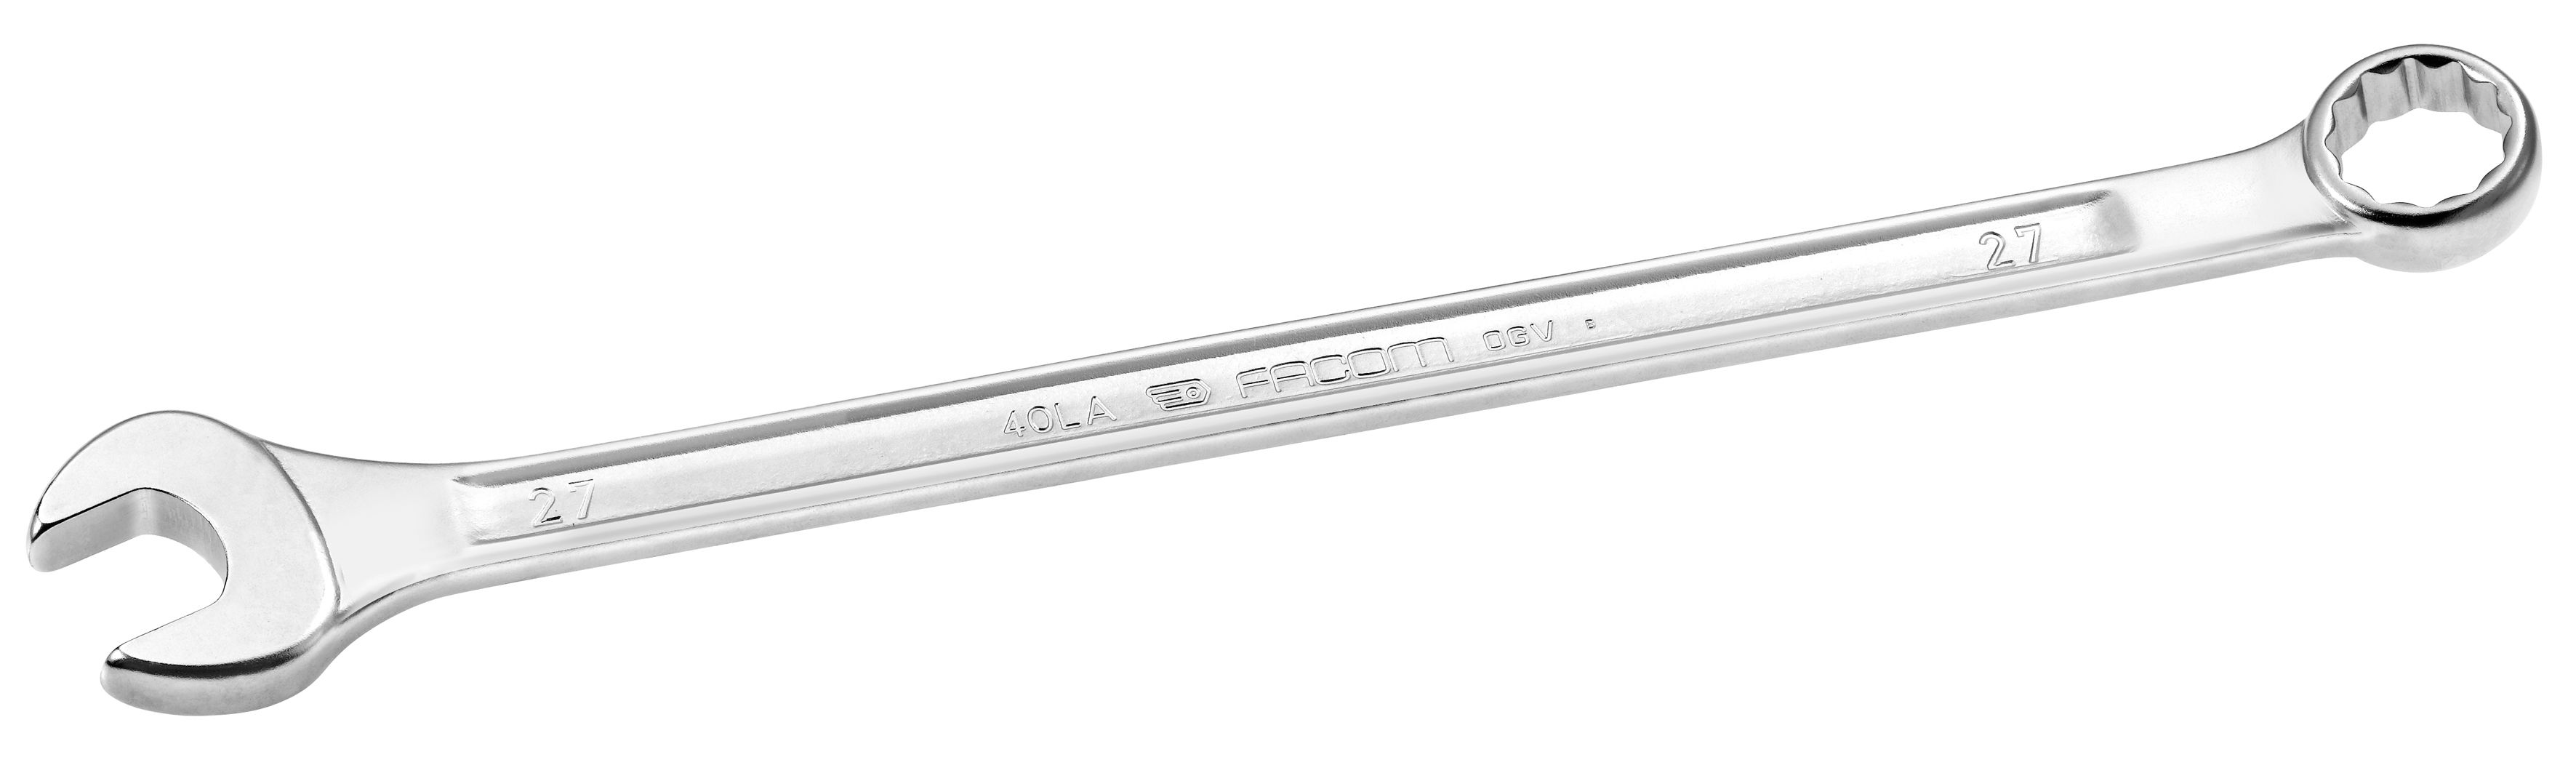 Facom Imperial AF Long Combination Spanner Wrench 40.3/4LA 